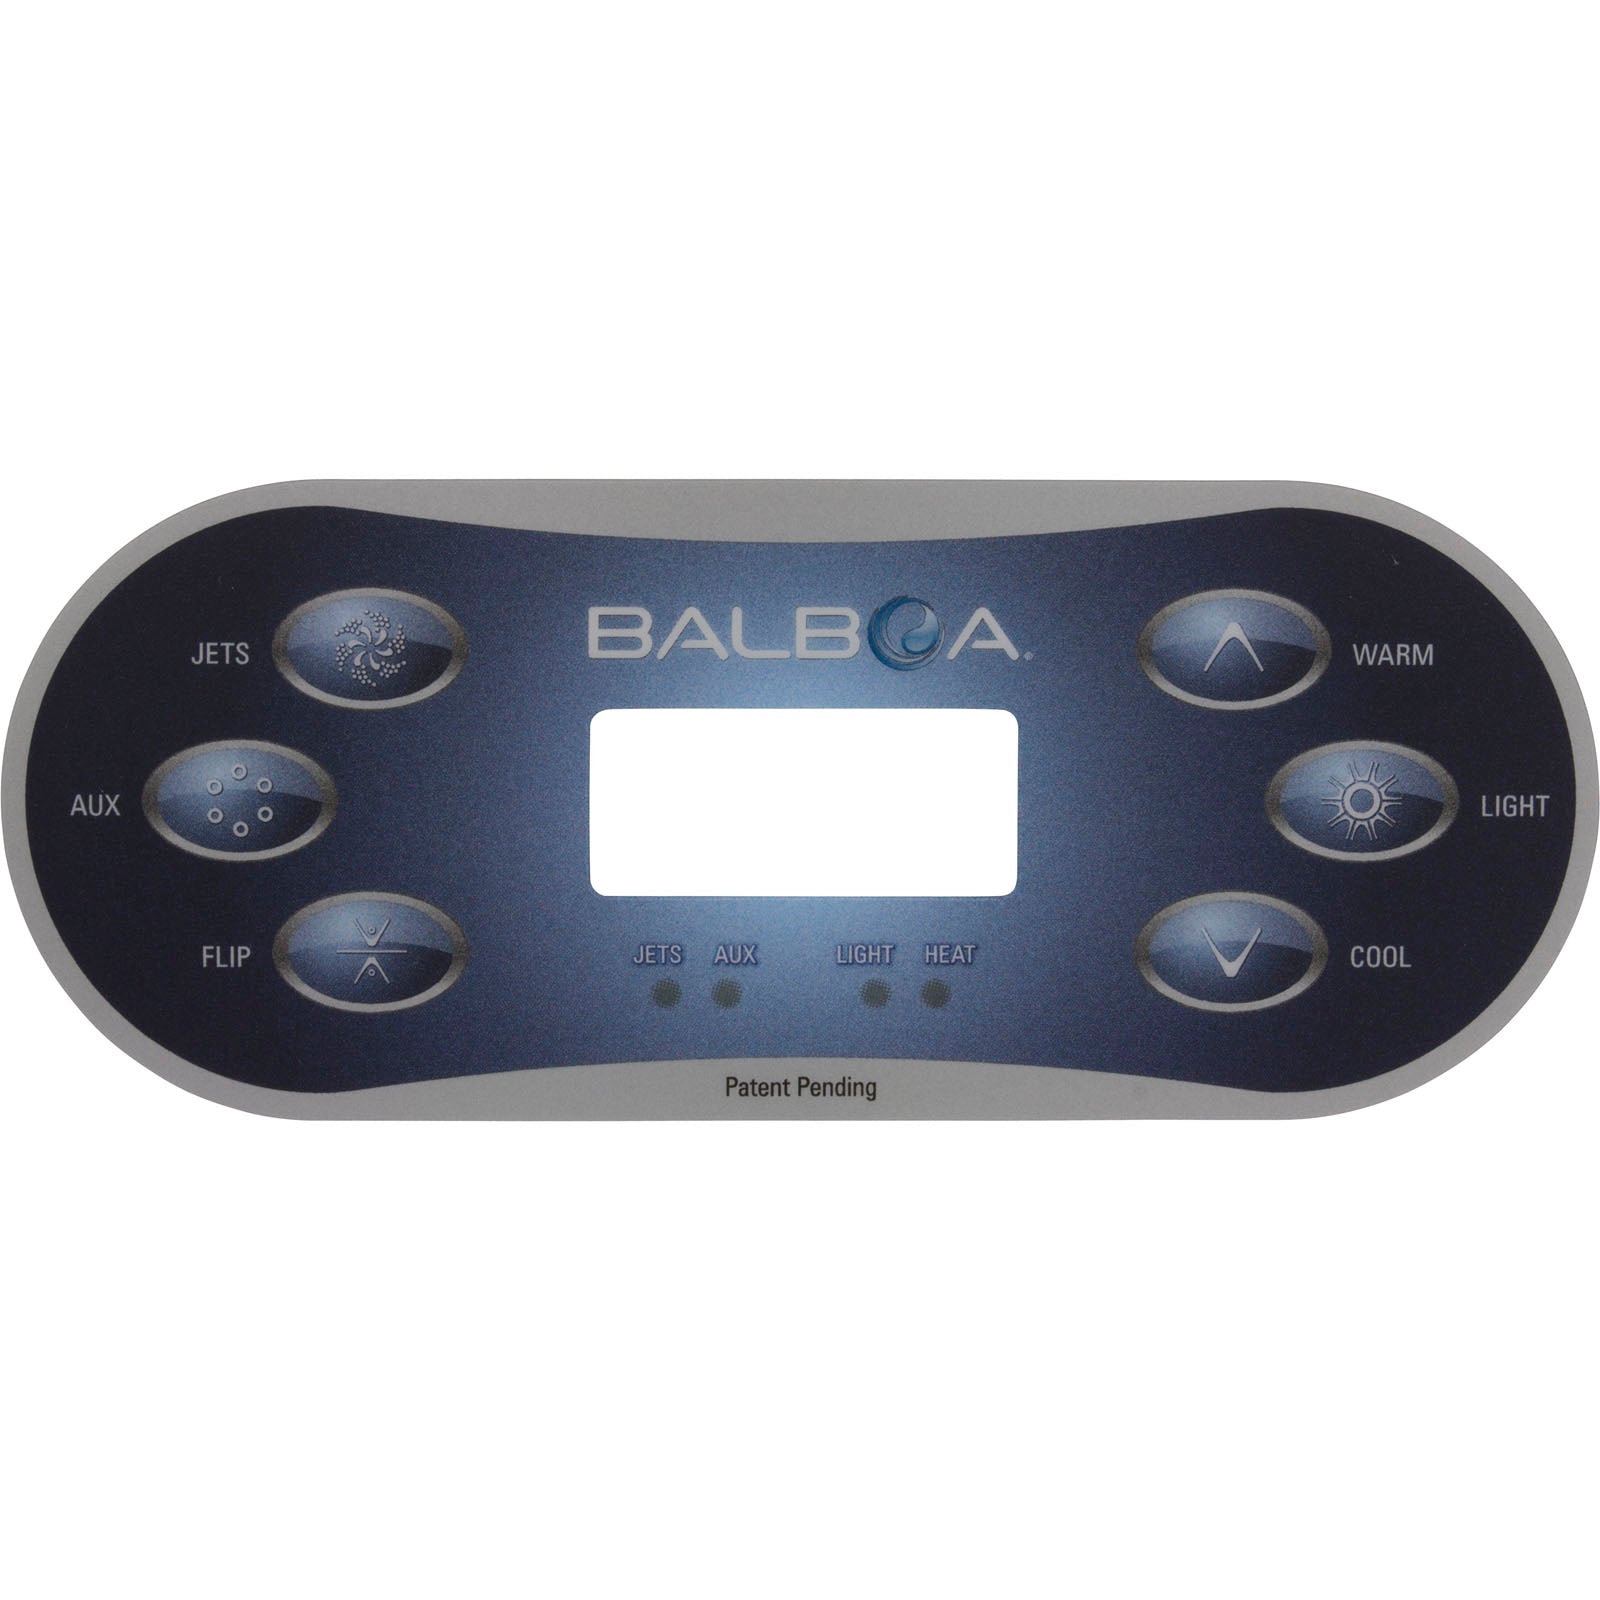 Balboa Overlay, TP600, Jets/Aux/Light (12101)